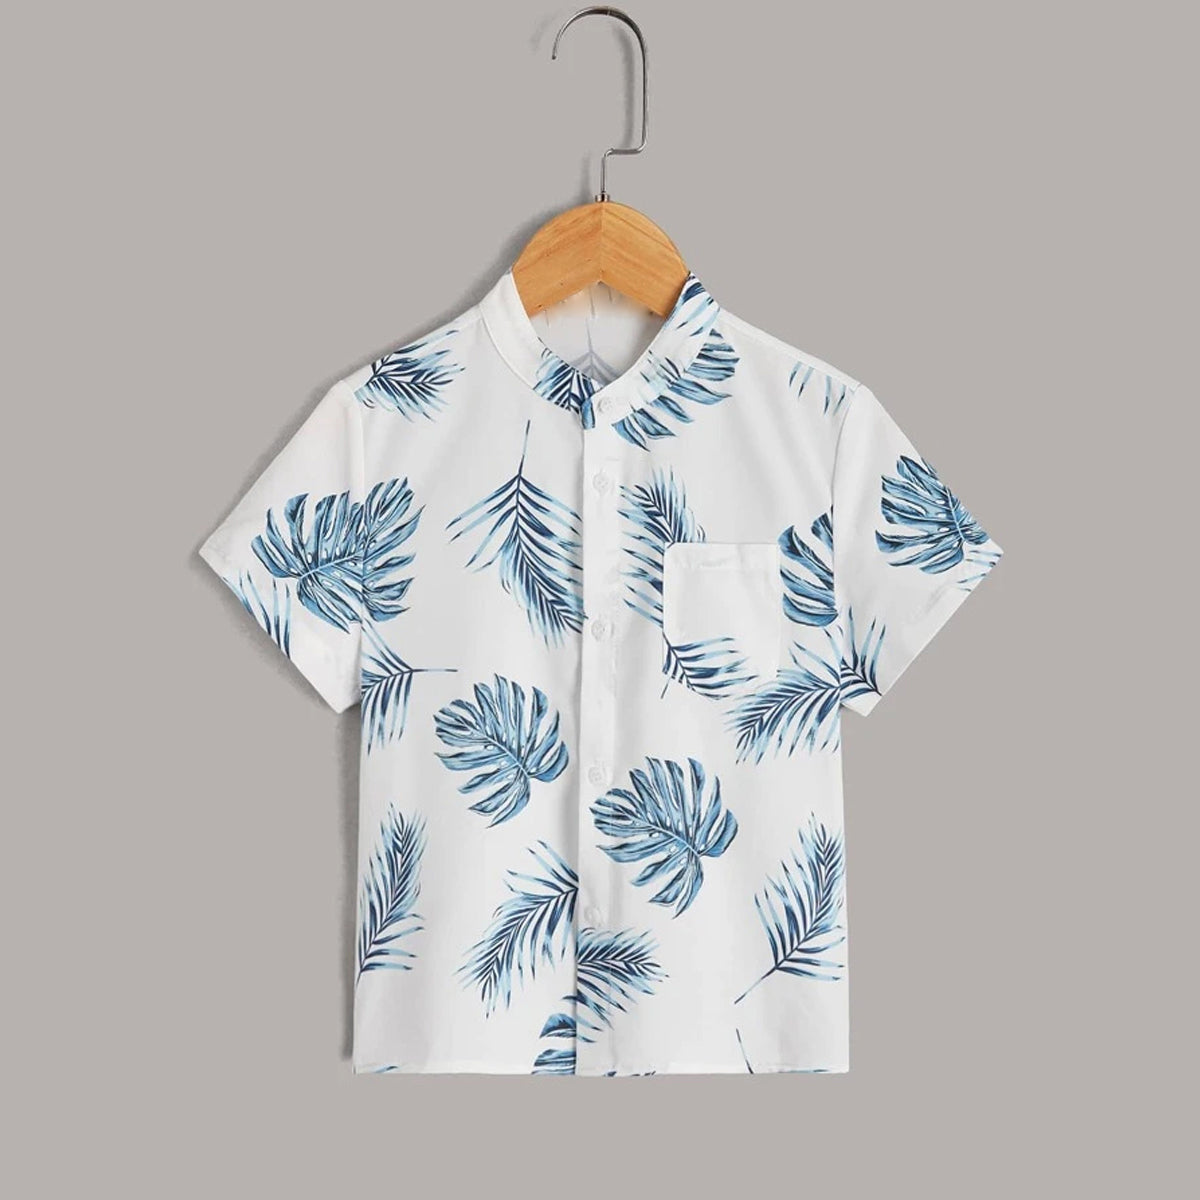 Venutaloza Blue Floral Print Button Front Shirt For Boy.